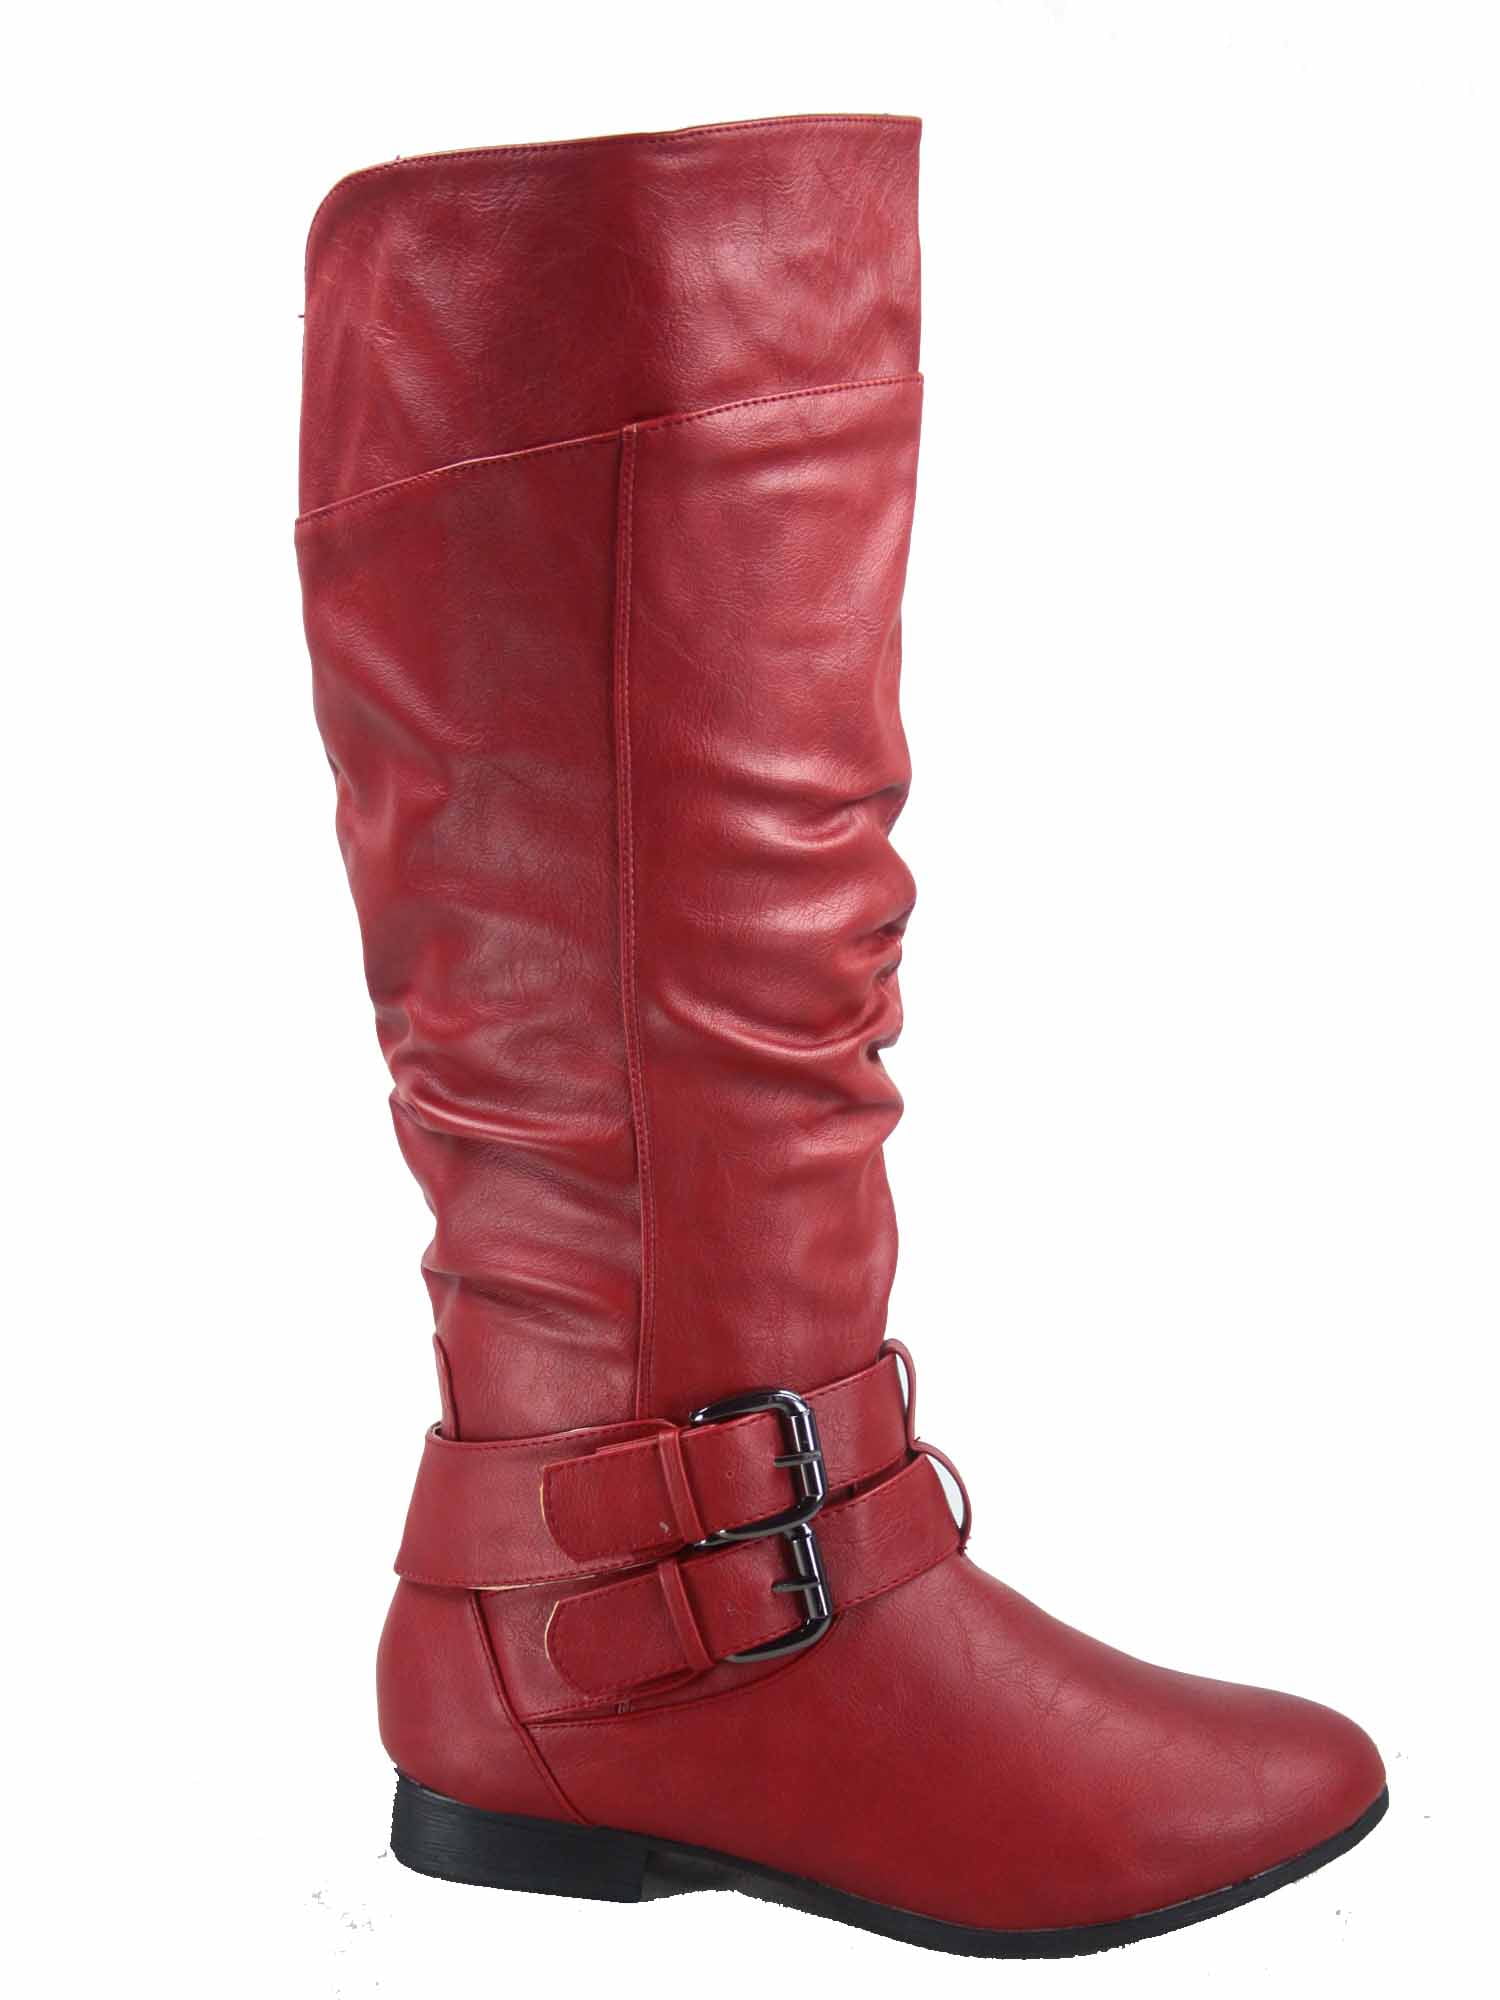 Top Moda Coco-20 Womens Fashion Round Toe Low Heel Knee High Zipper Riding Boot Shoes 